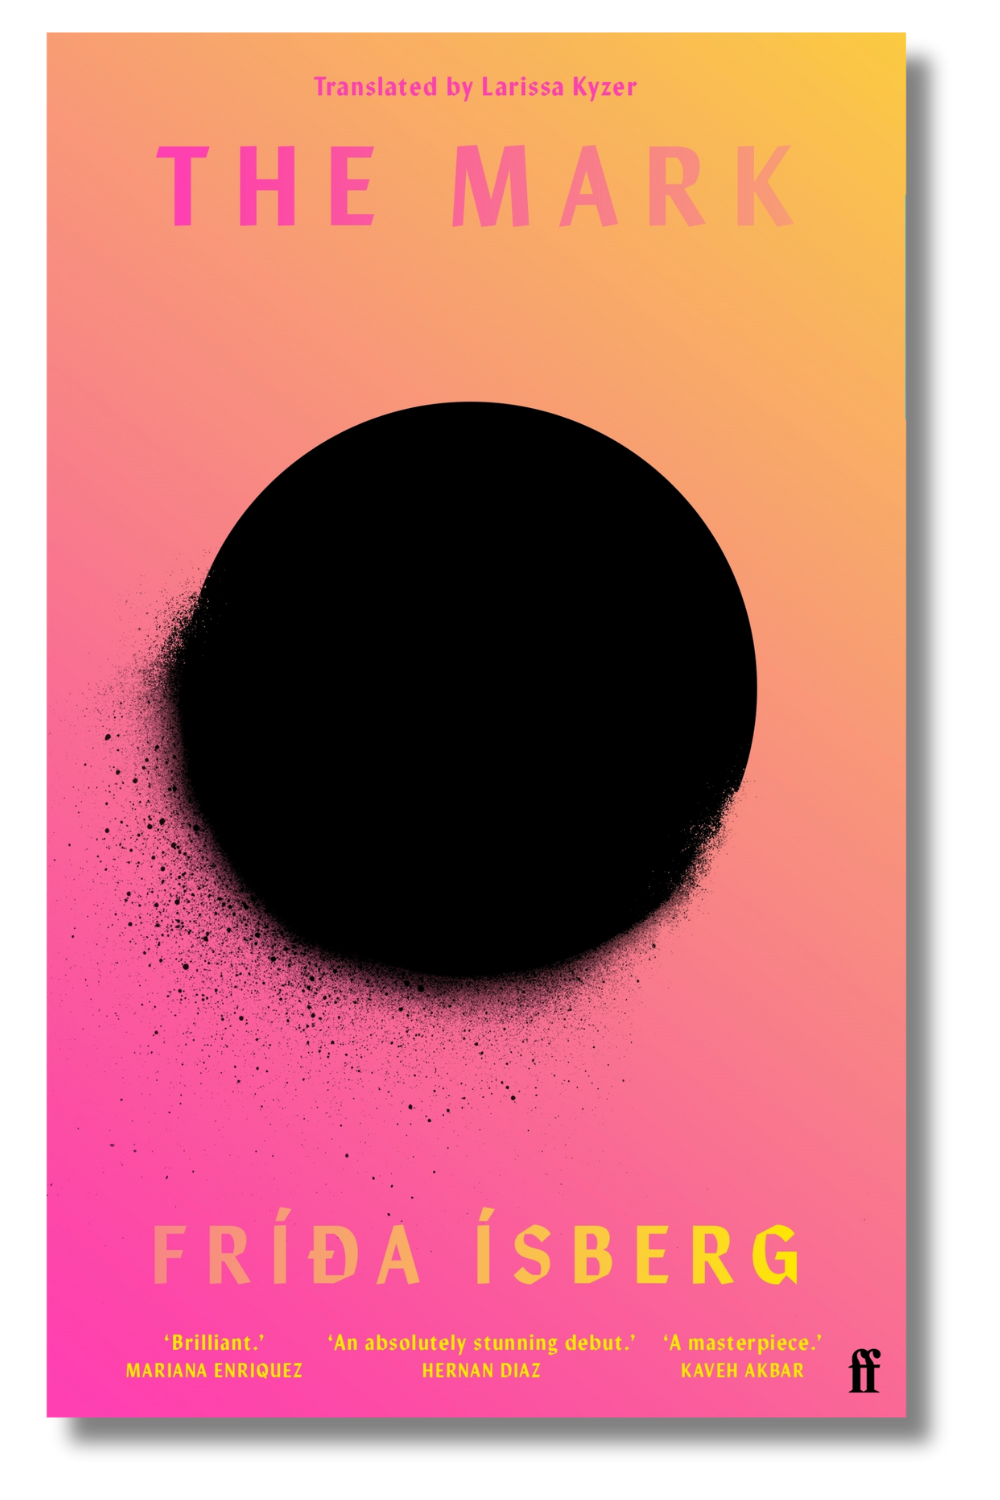 The cover of "The Mark" by Fríða Ísberg, translated by Larissa Kyzer